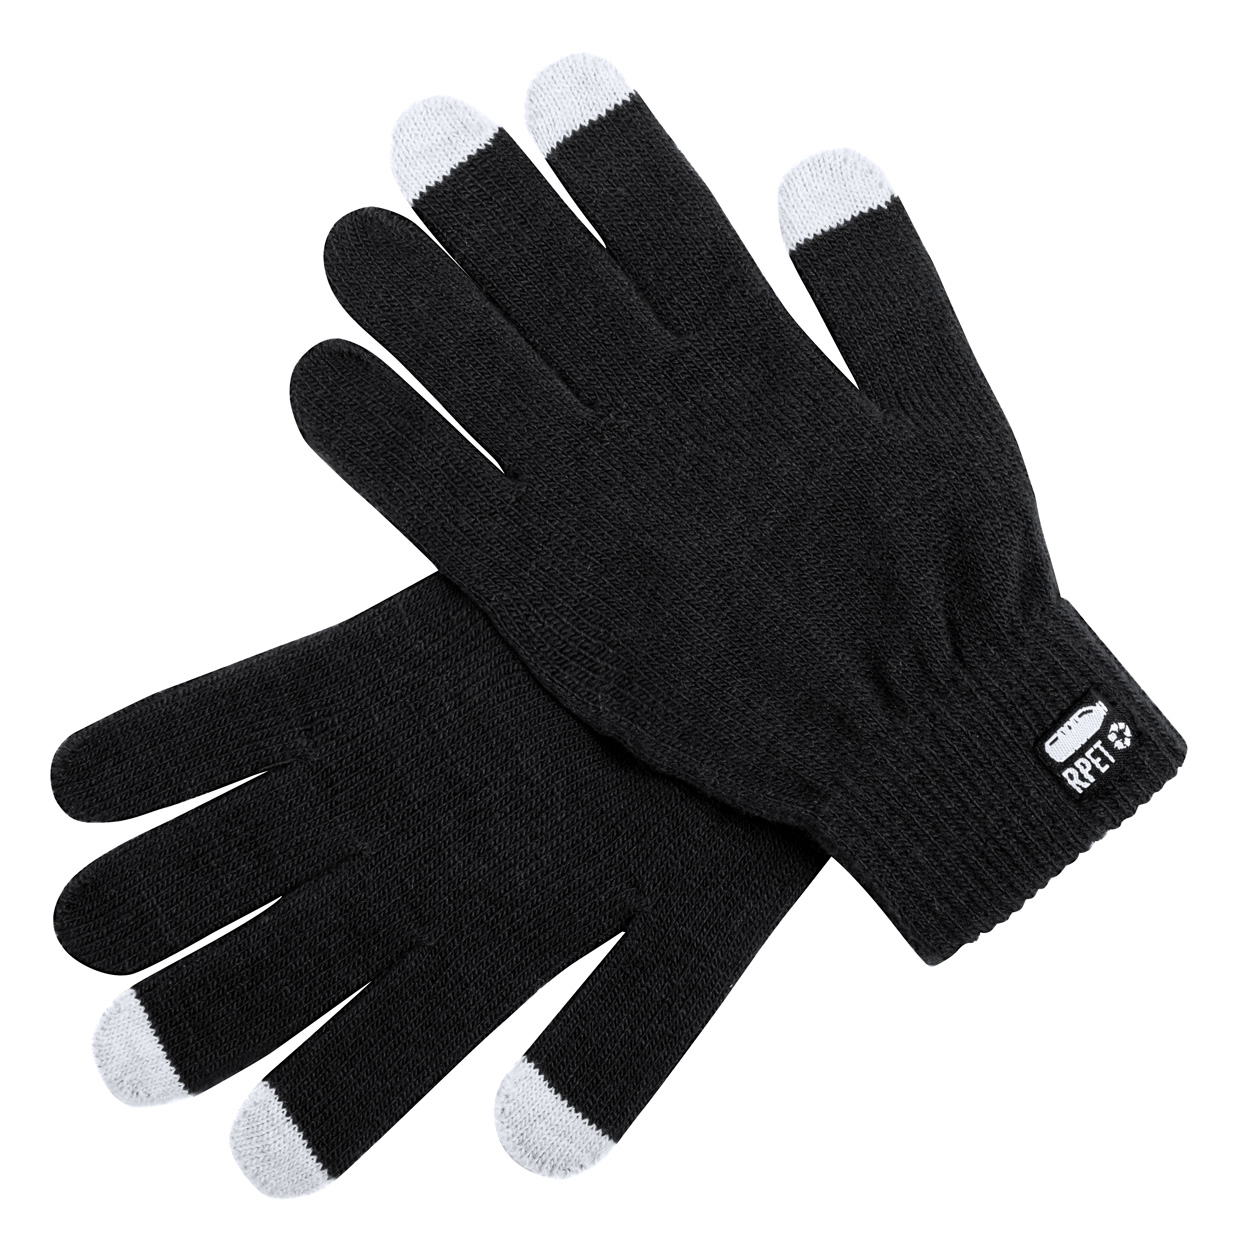 Despil RPET touch screen gloves